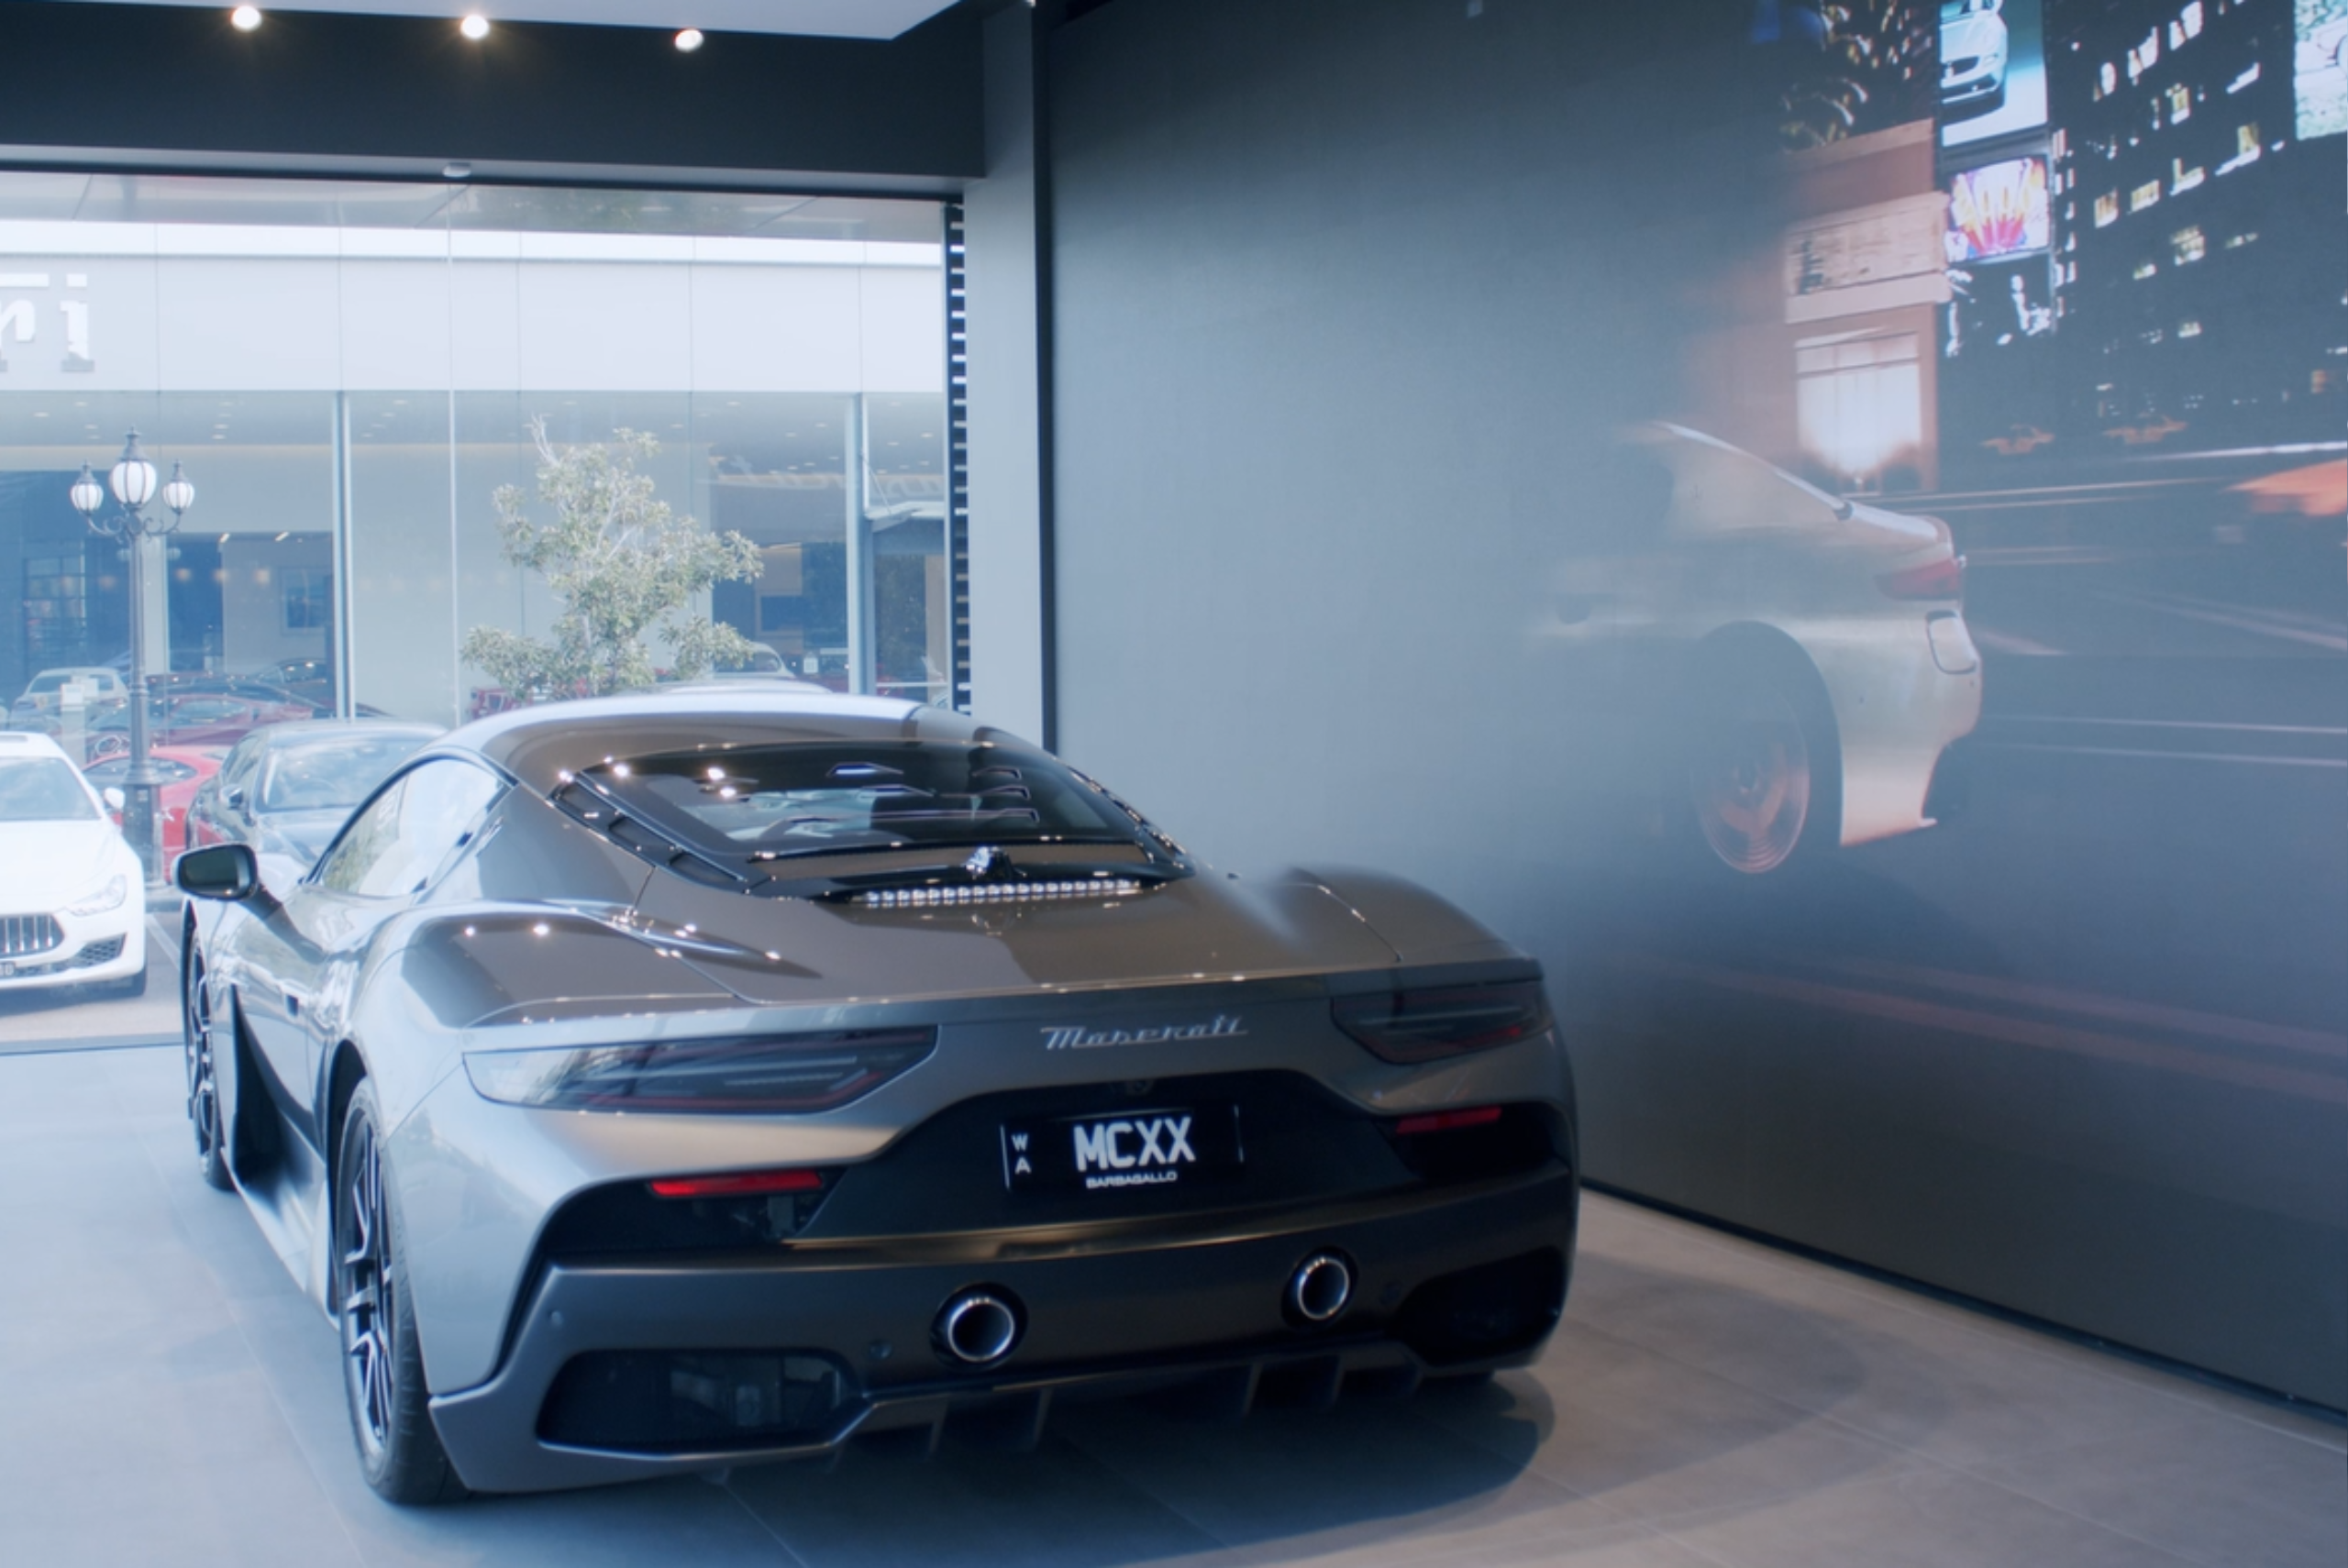 precision-engineered lighting control system for Maserati dealership Perth